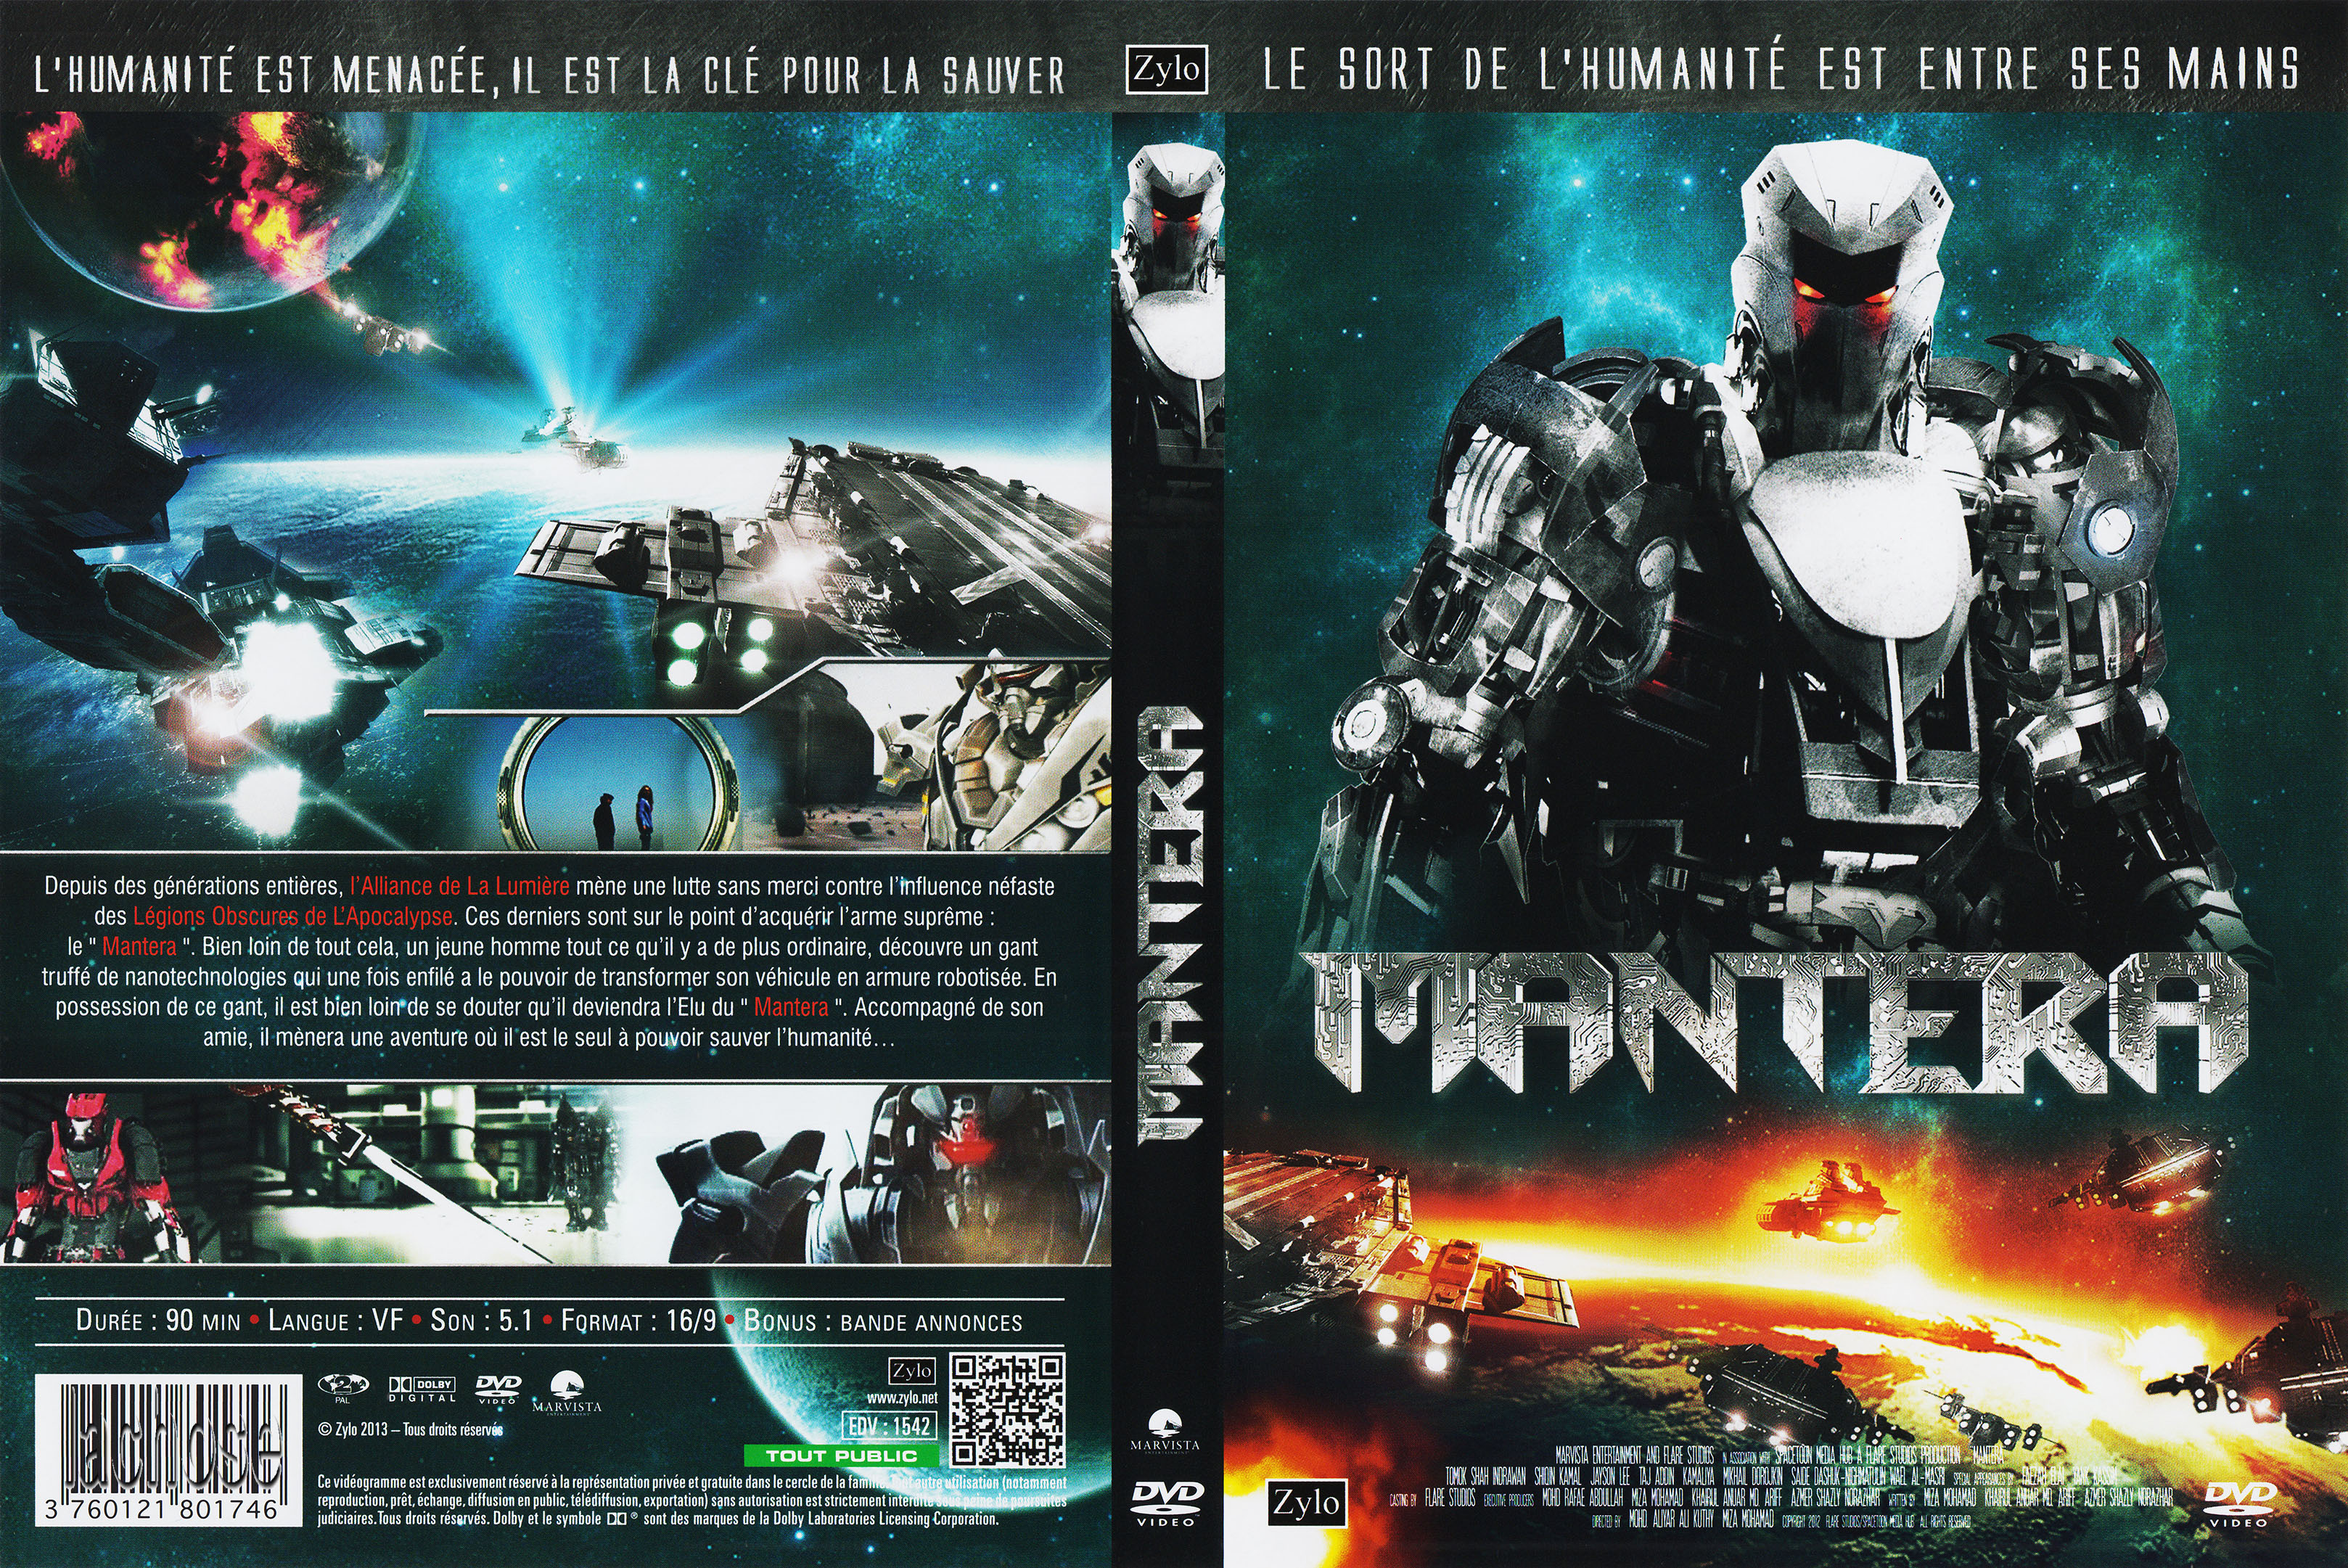 Jaquette DVD Mantera